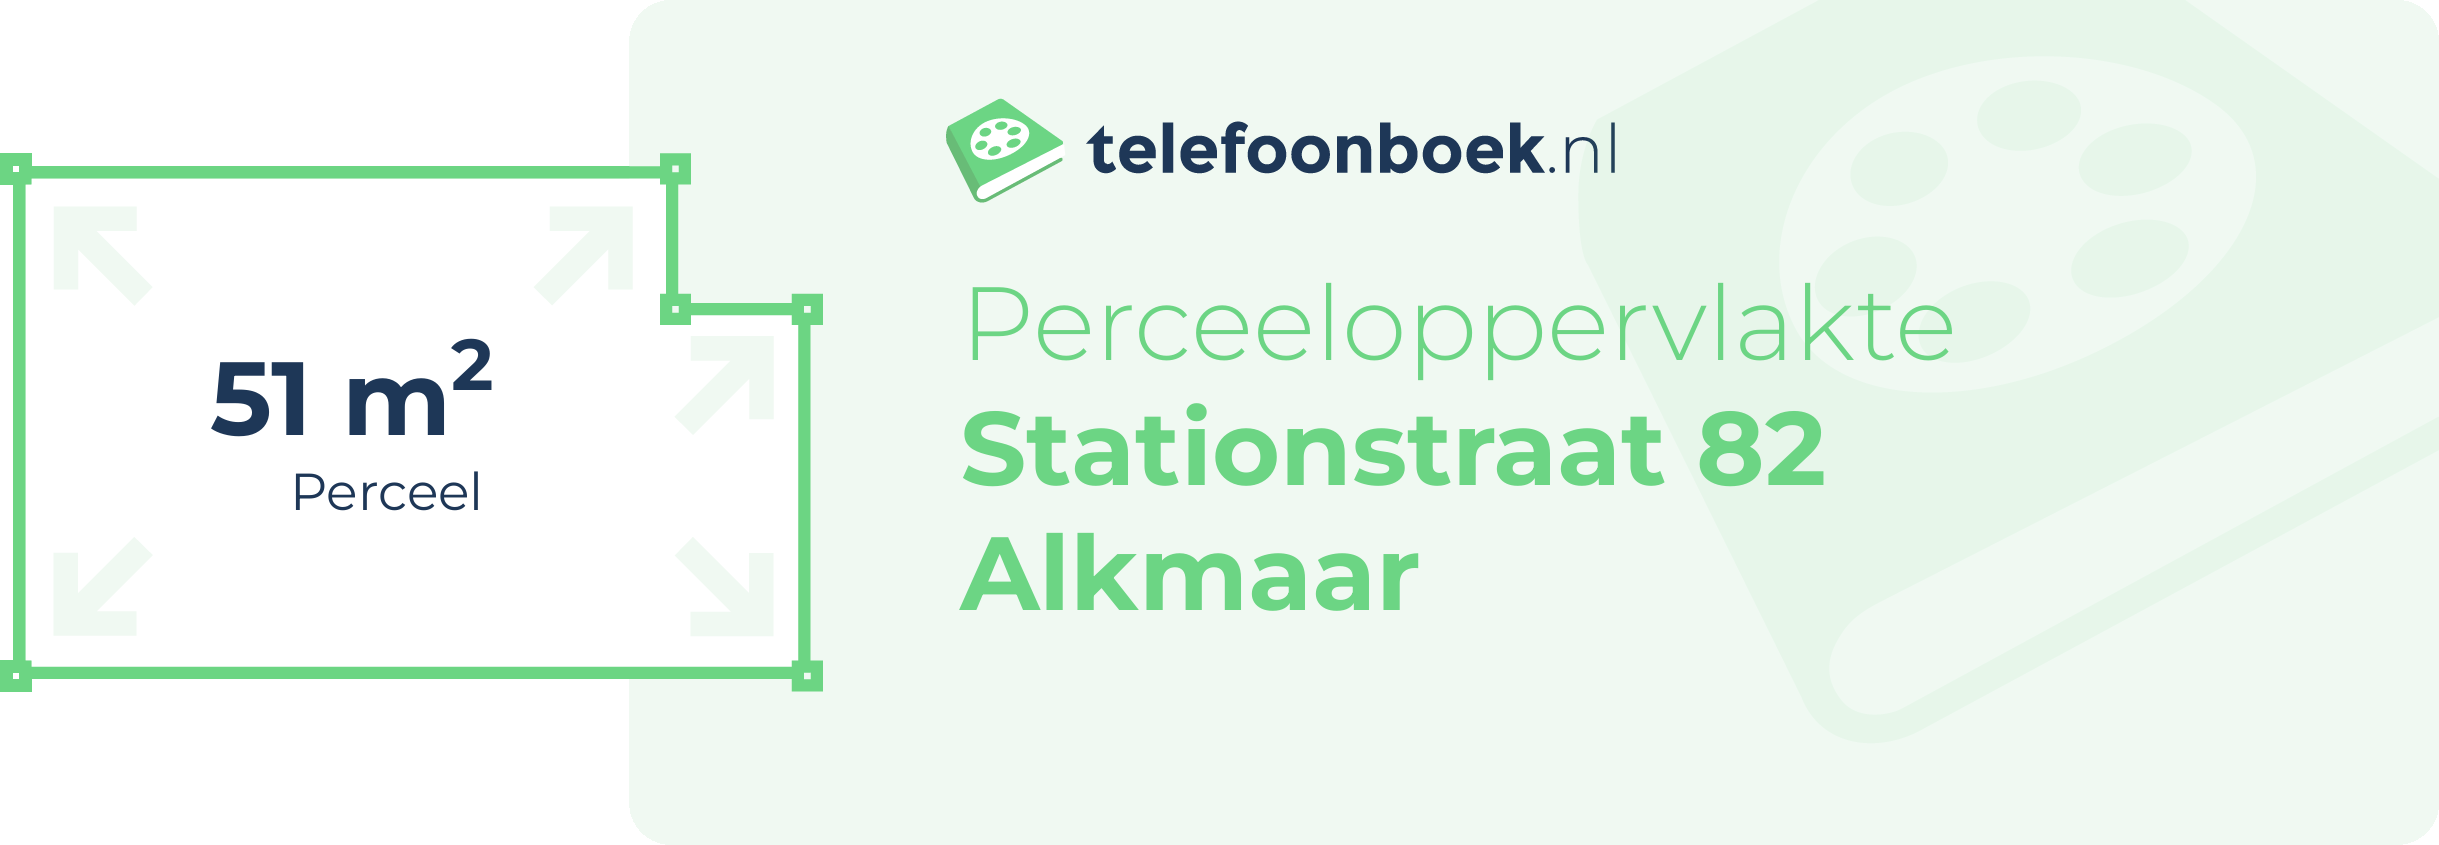 Perceeloppervlakte Stationstraat 82 Alkmaar